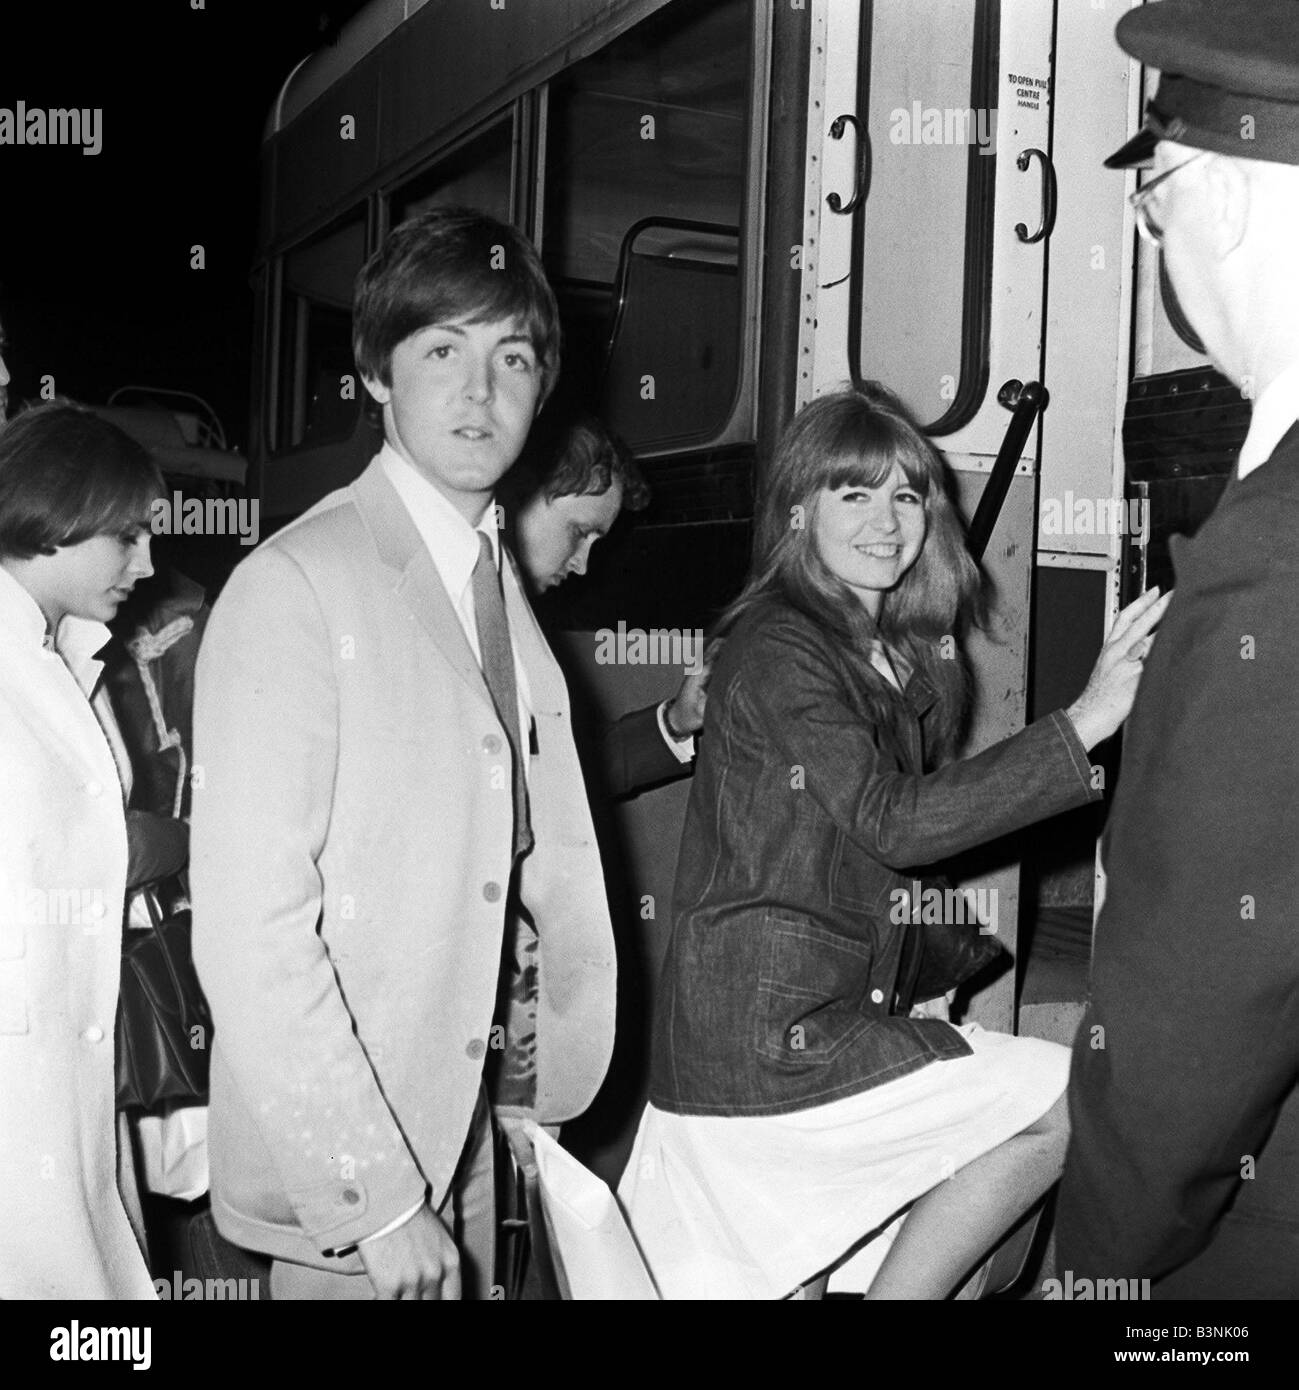 Beatles singer Paul McCartney singer with girlfriend Jane Asher getting ...